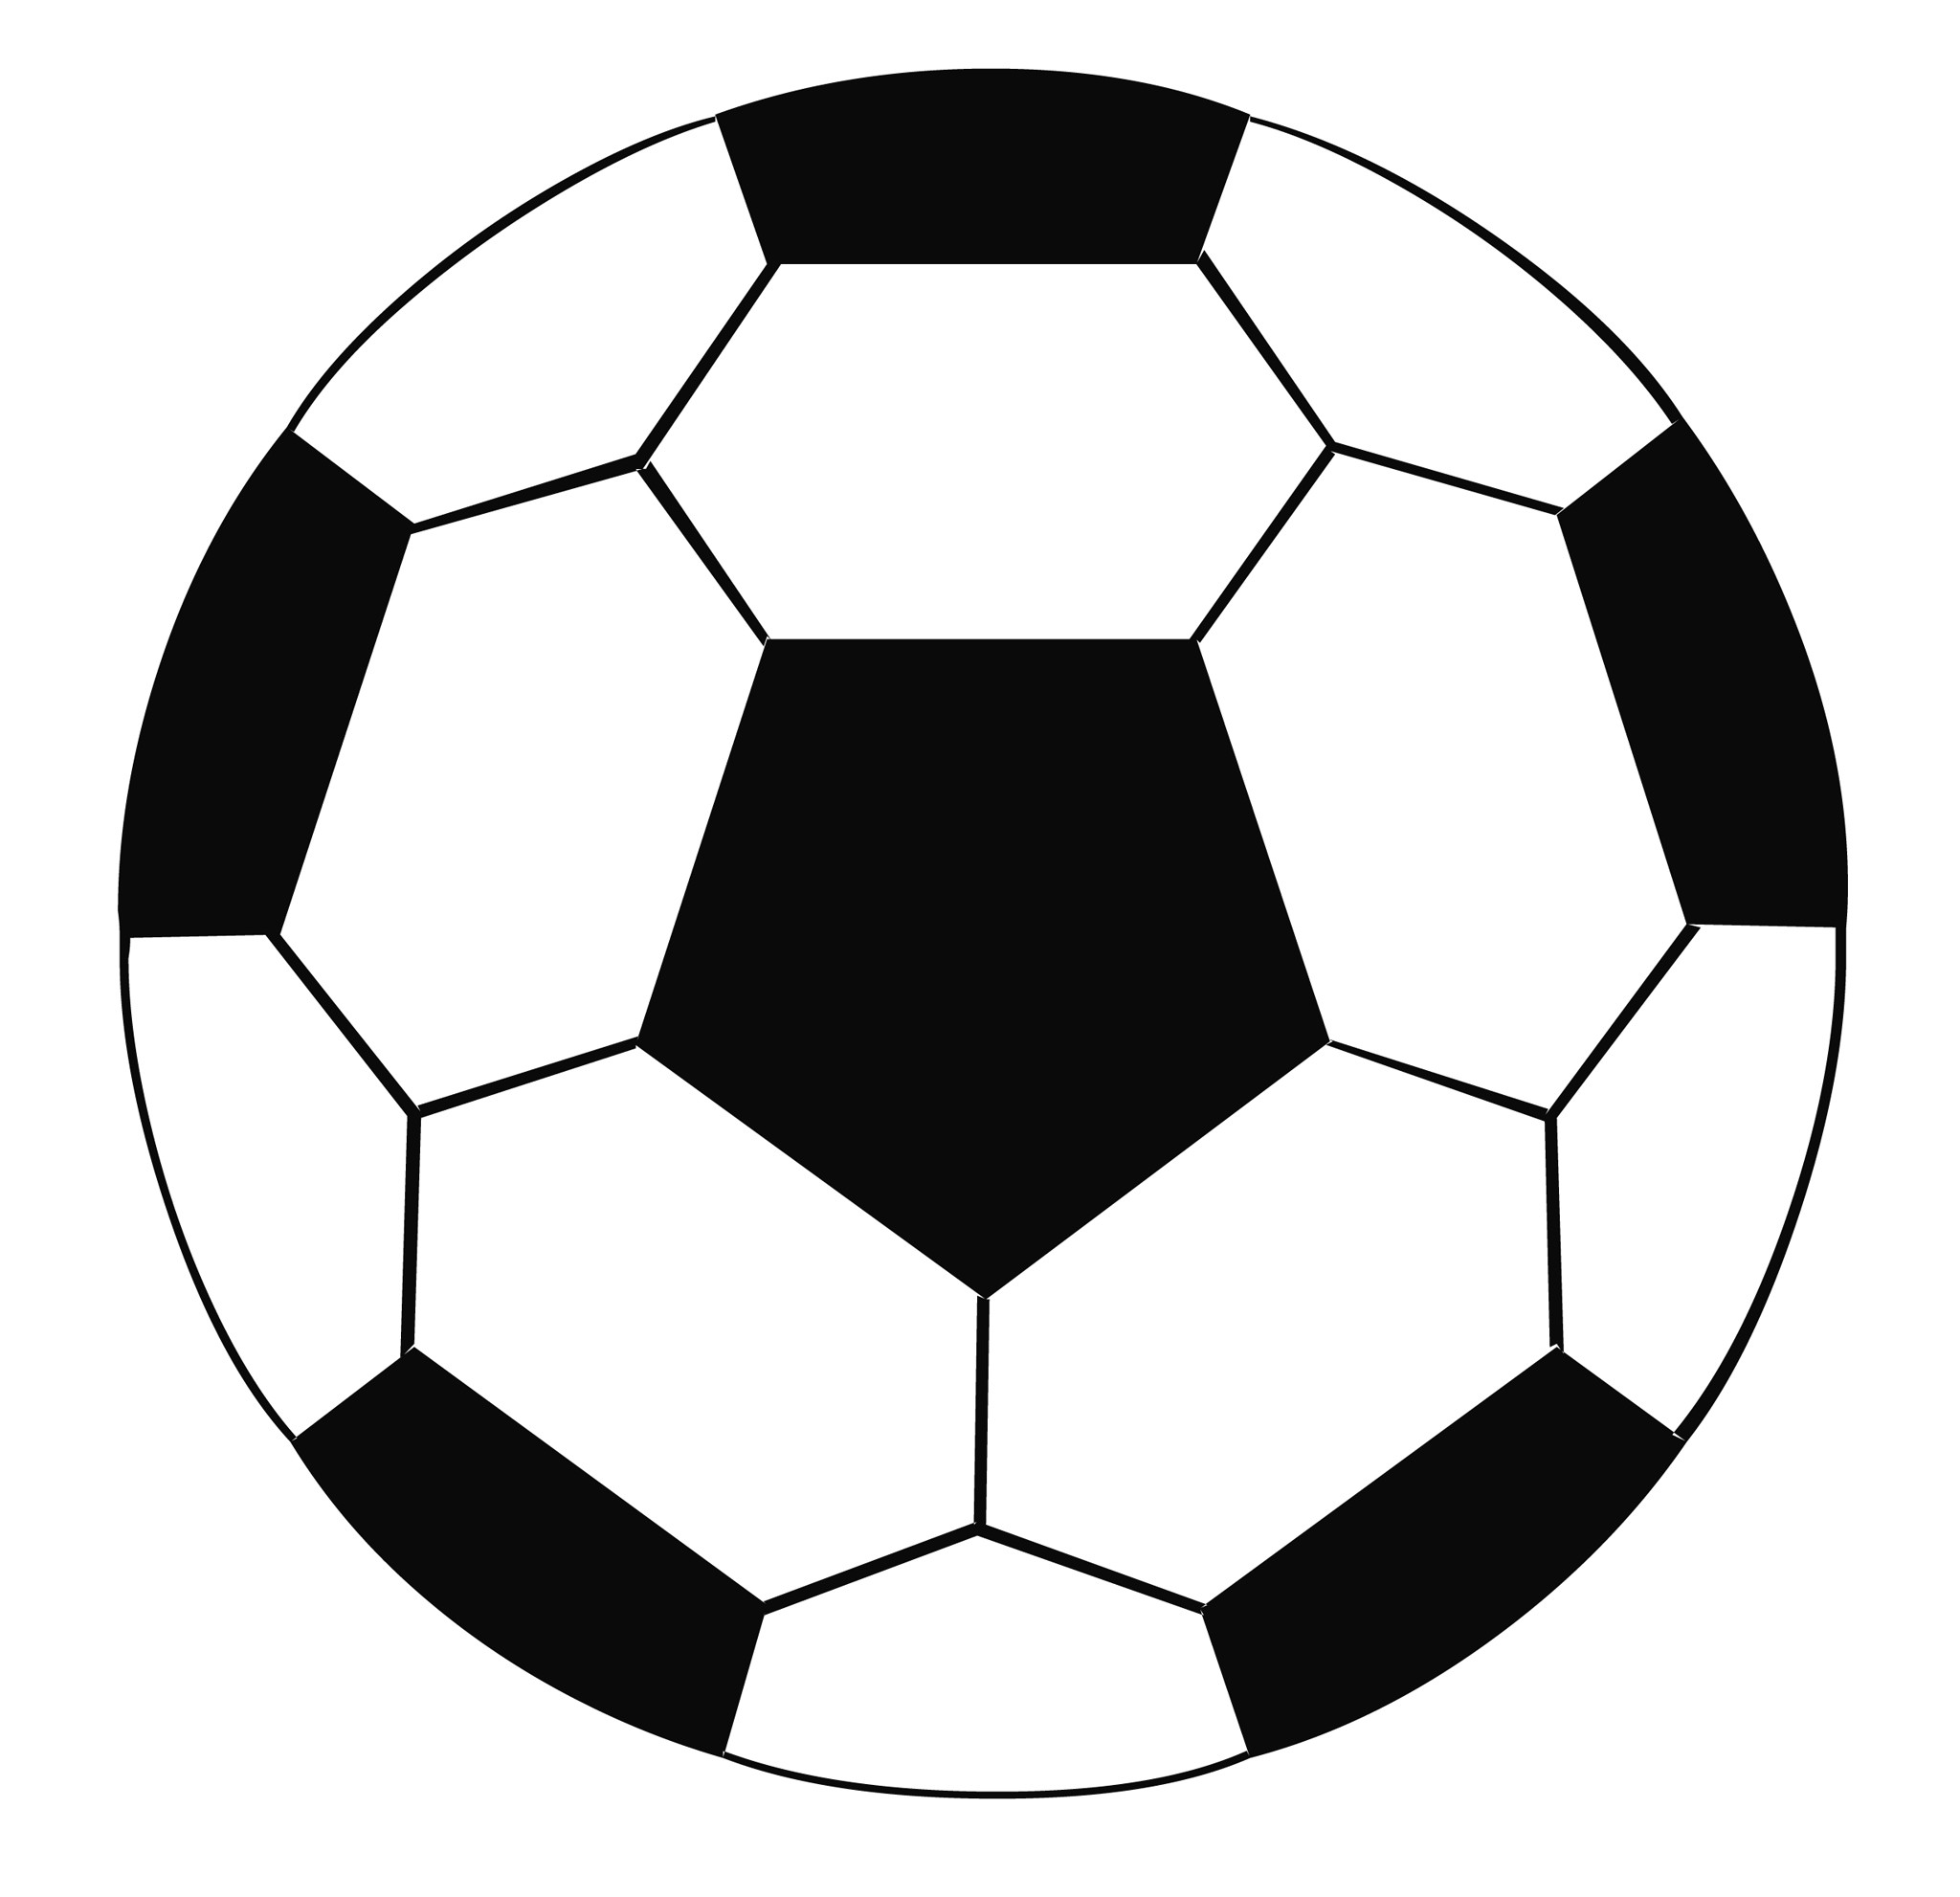 Soccer ball soccer clipart image football player kicking a 3 ...